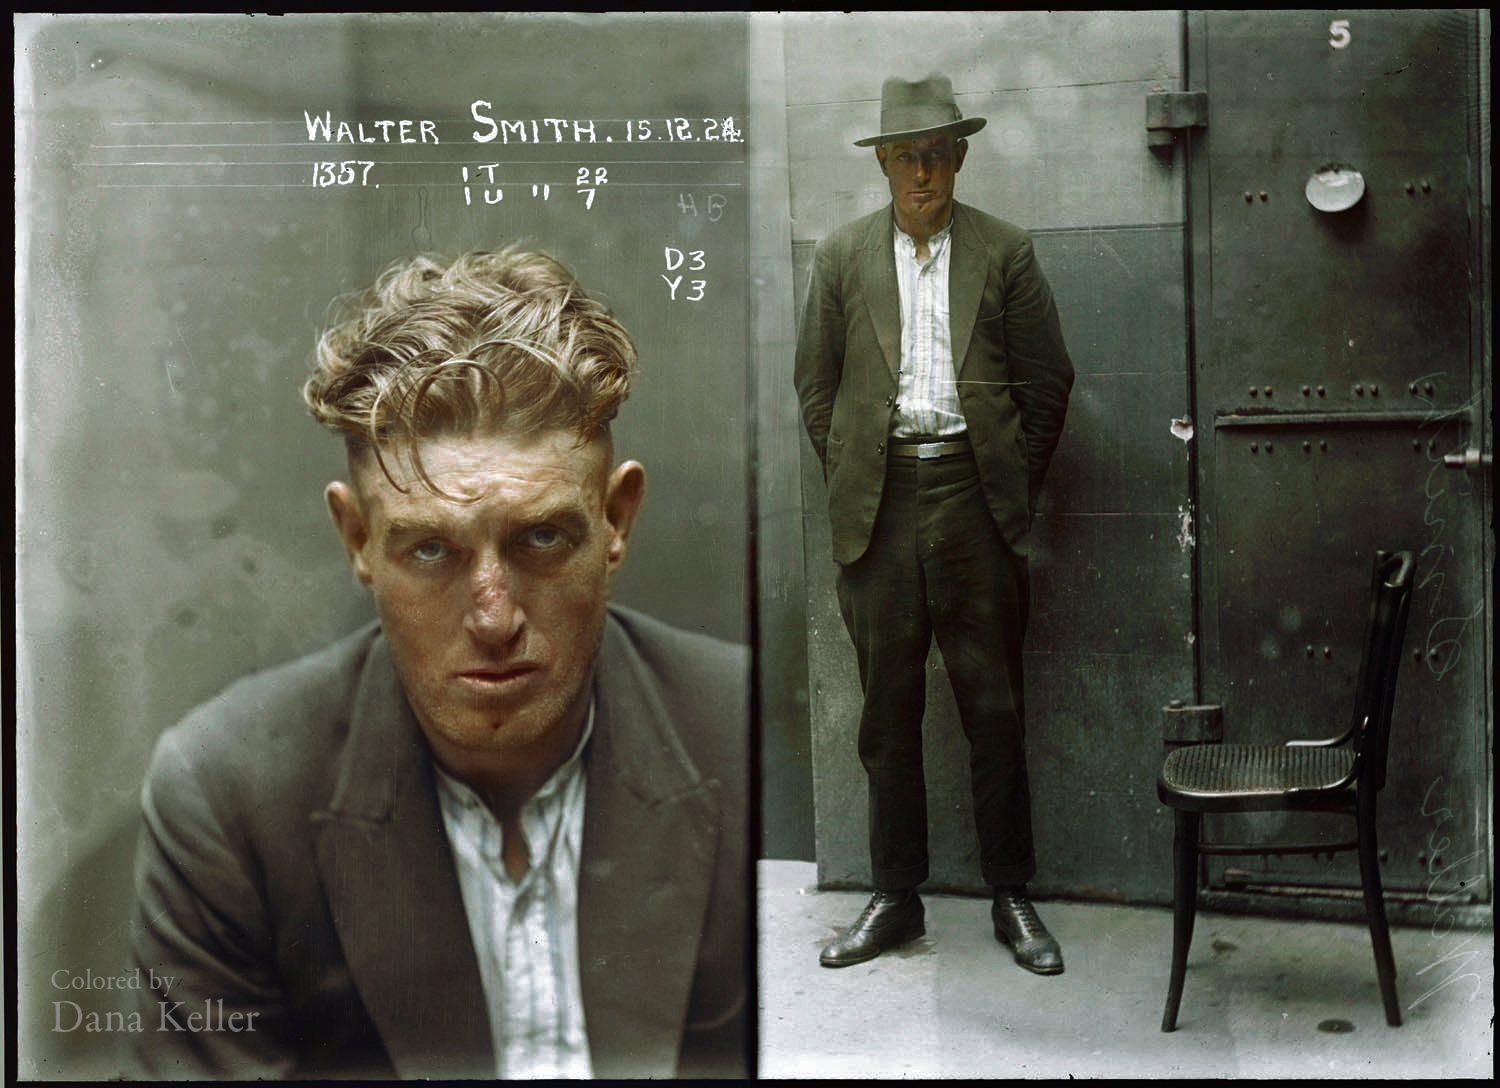 Walter Smith - December 1924